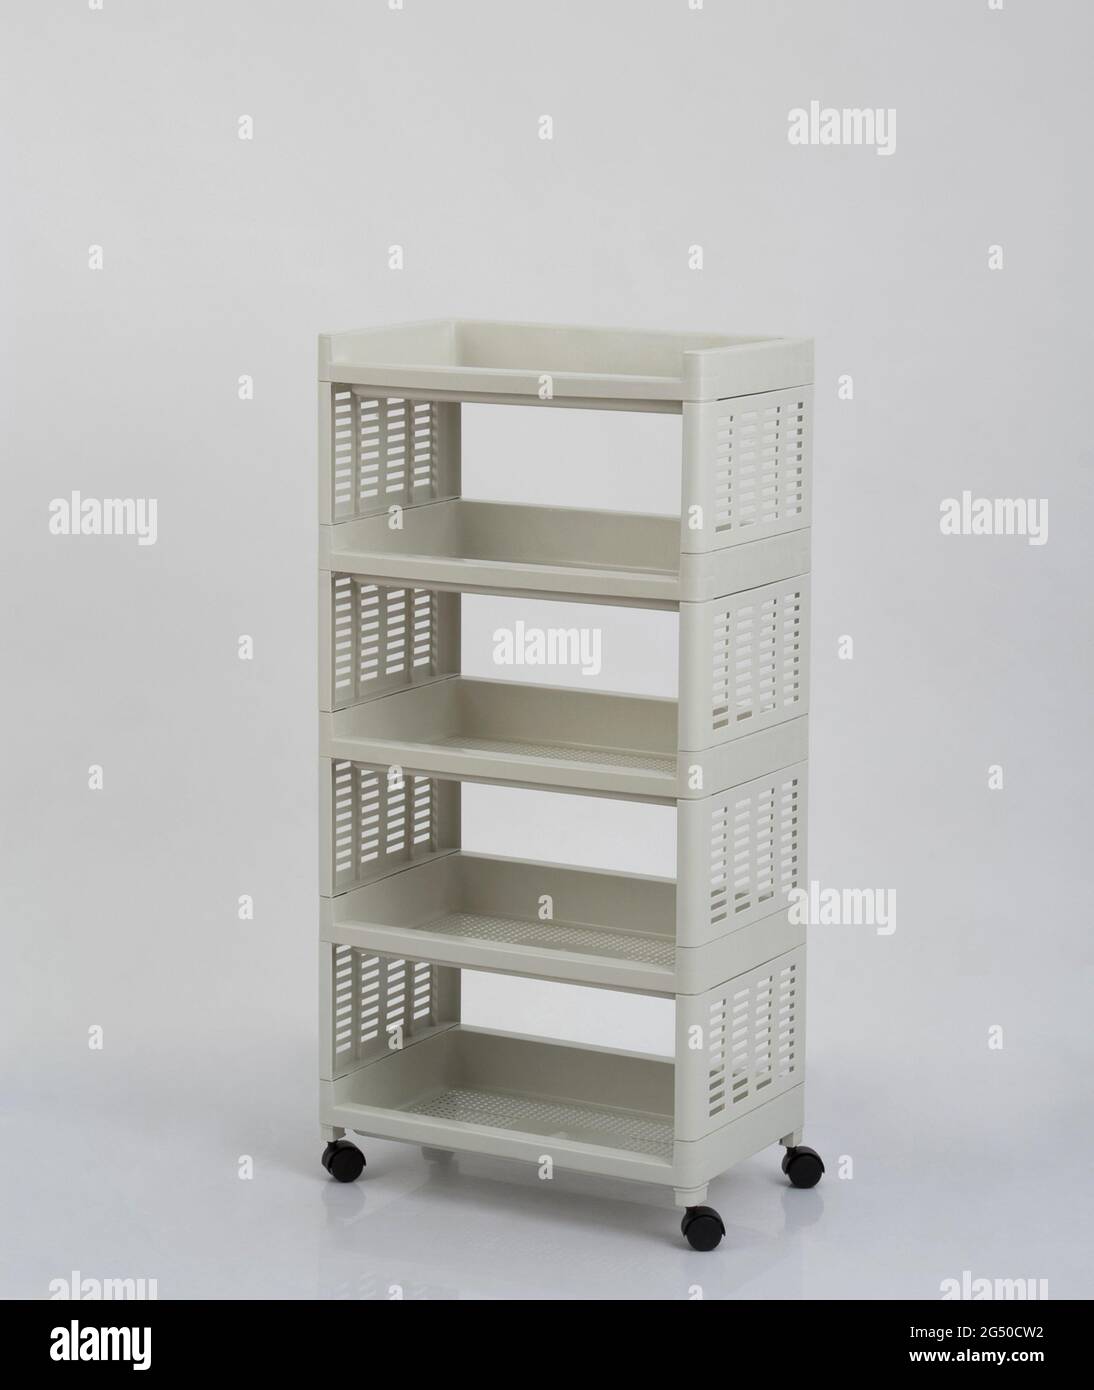 Empty white plastic shelves rack with wheels isolated on white background  Stock Photo - Alamy